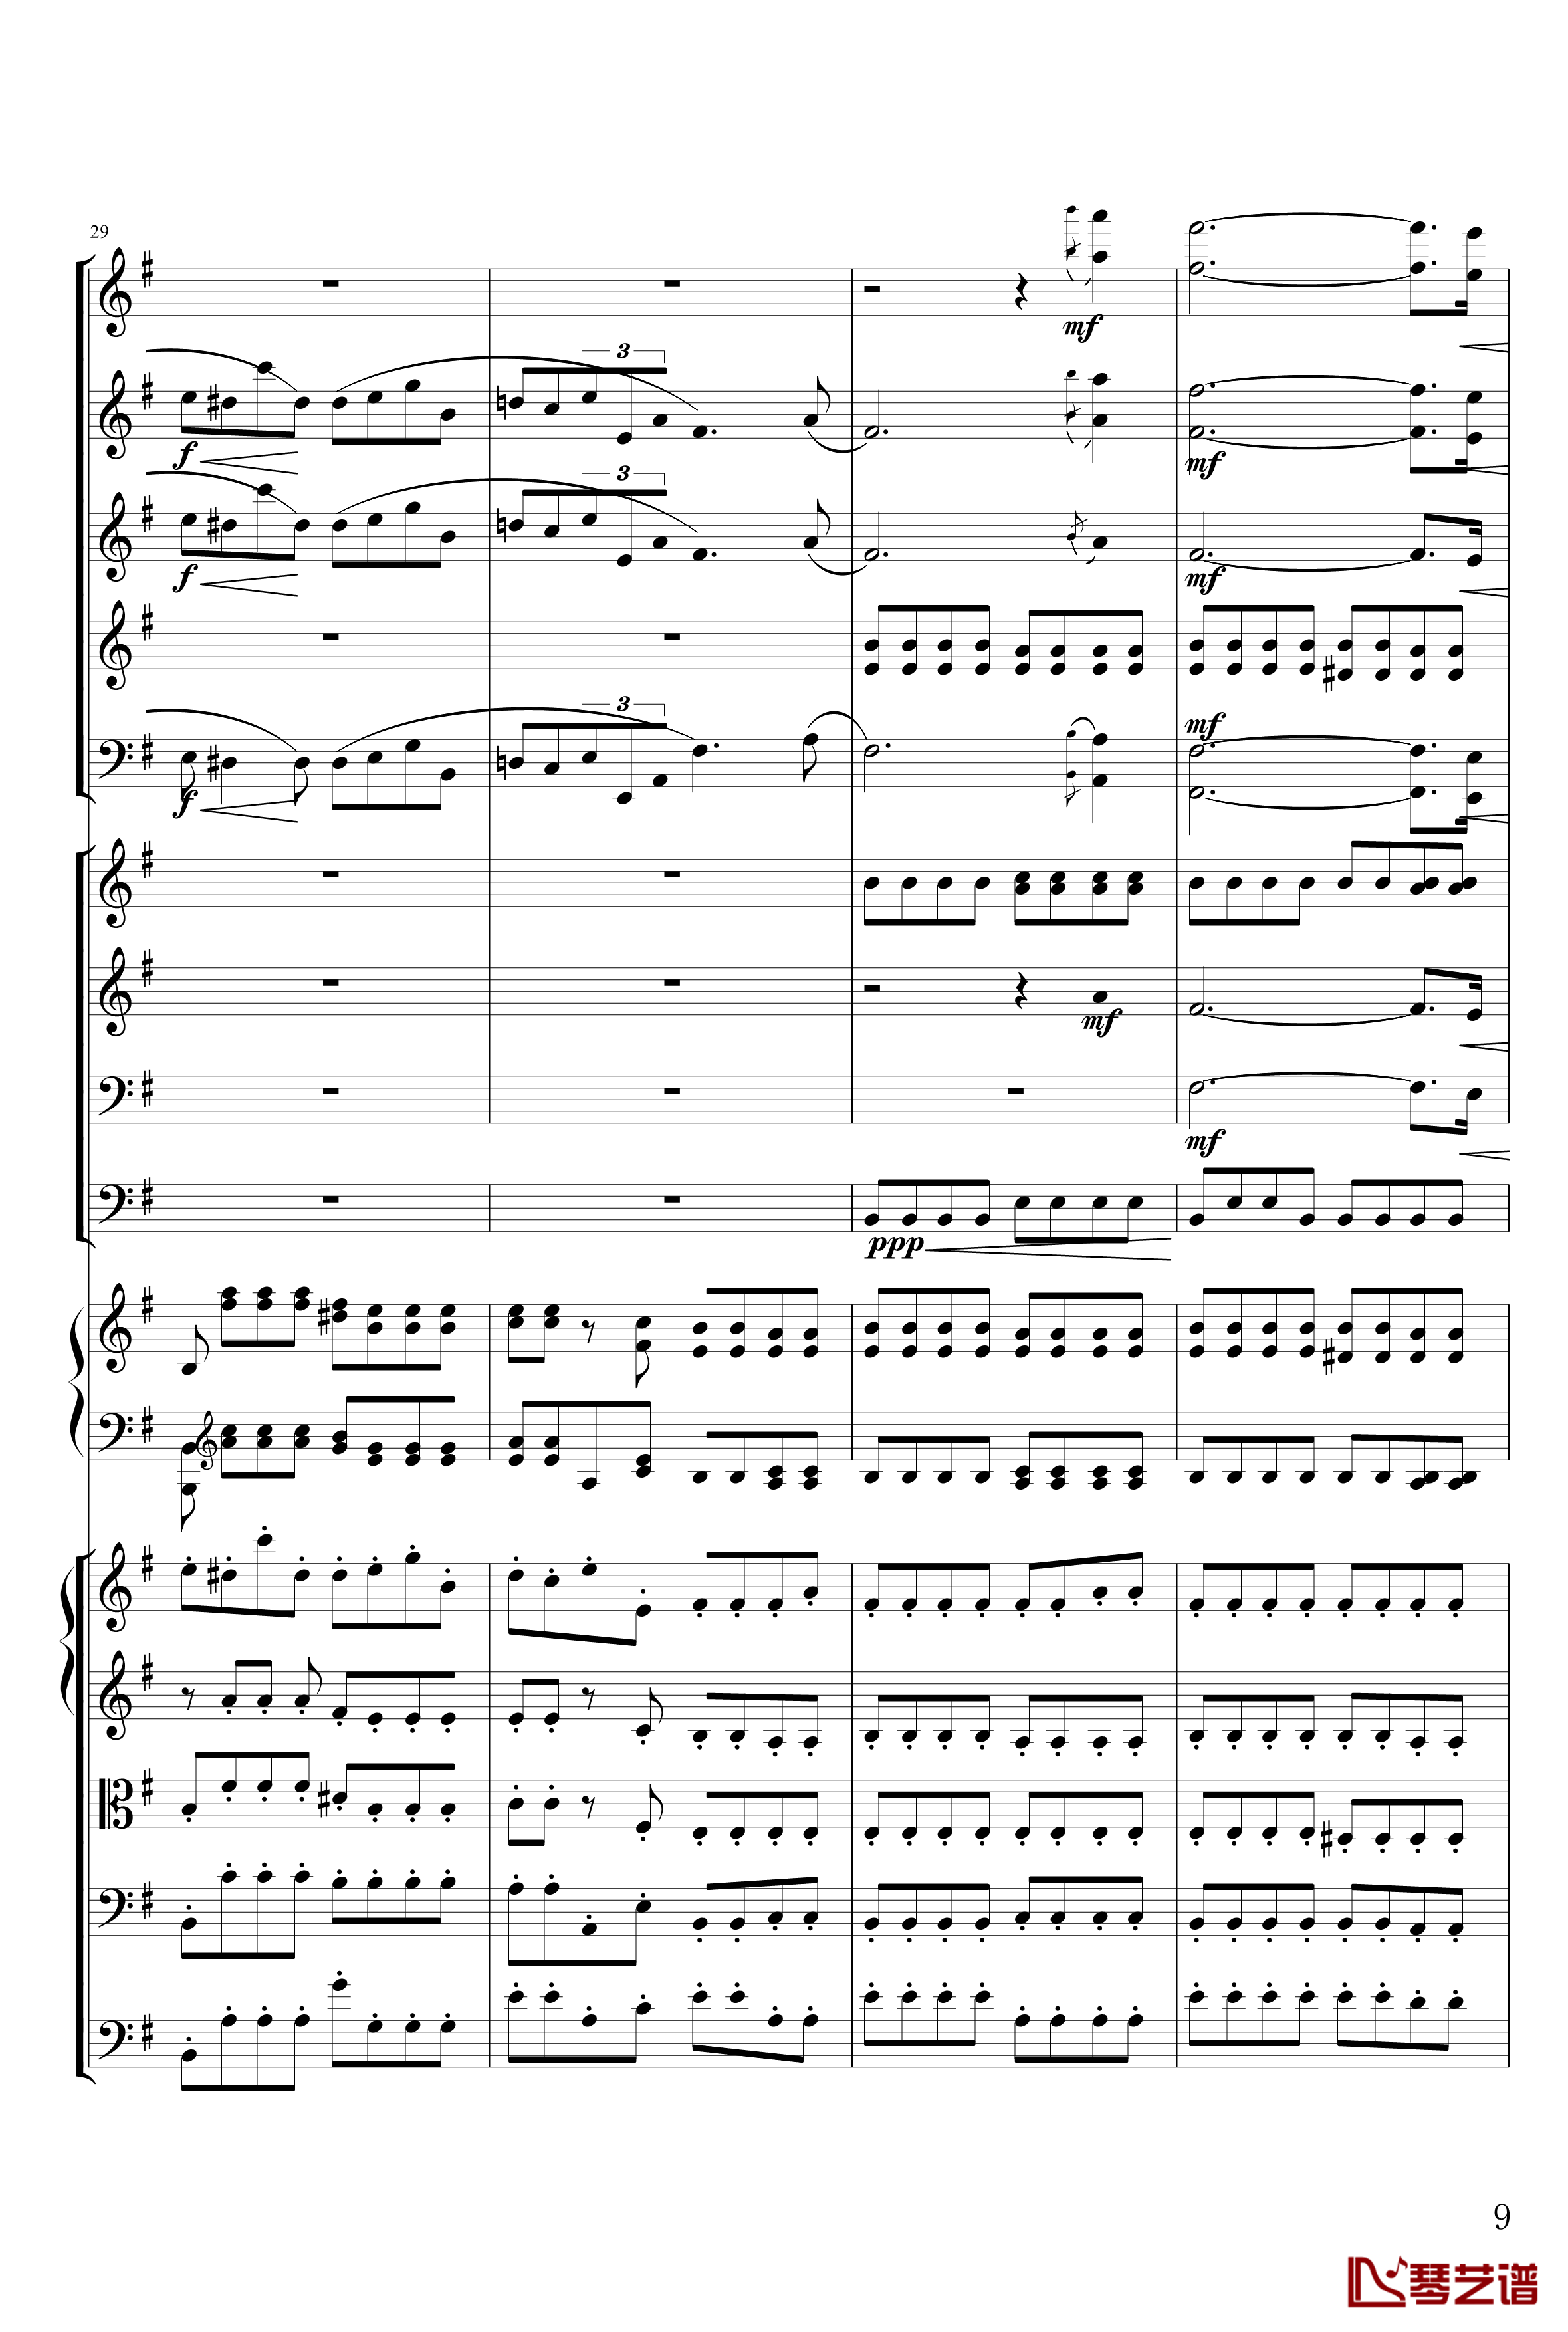 E小调前奏曲钢琴谱-交响乐版-肖邦-chopin9